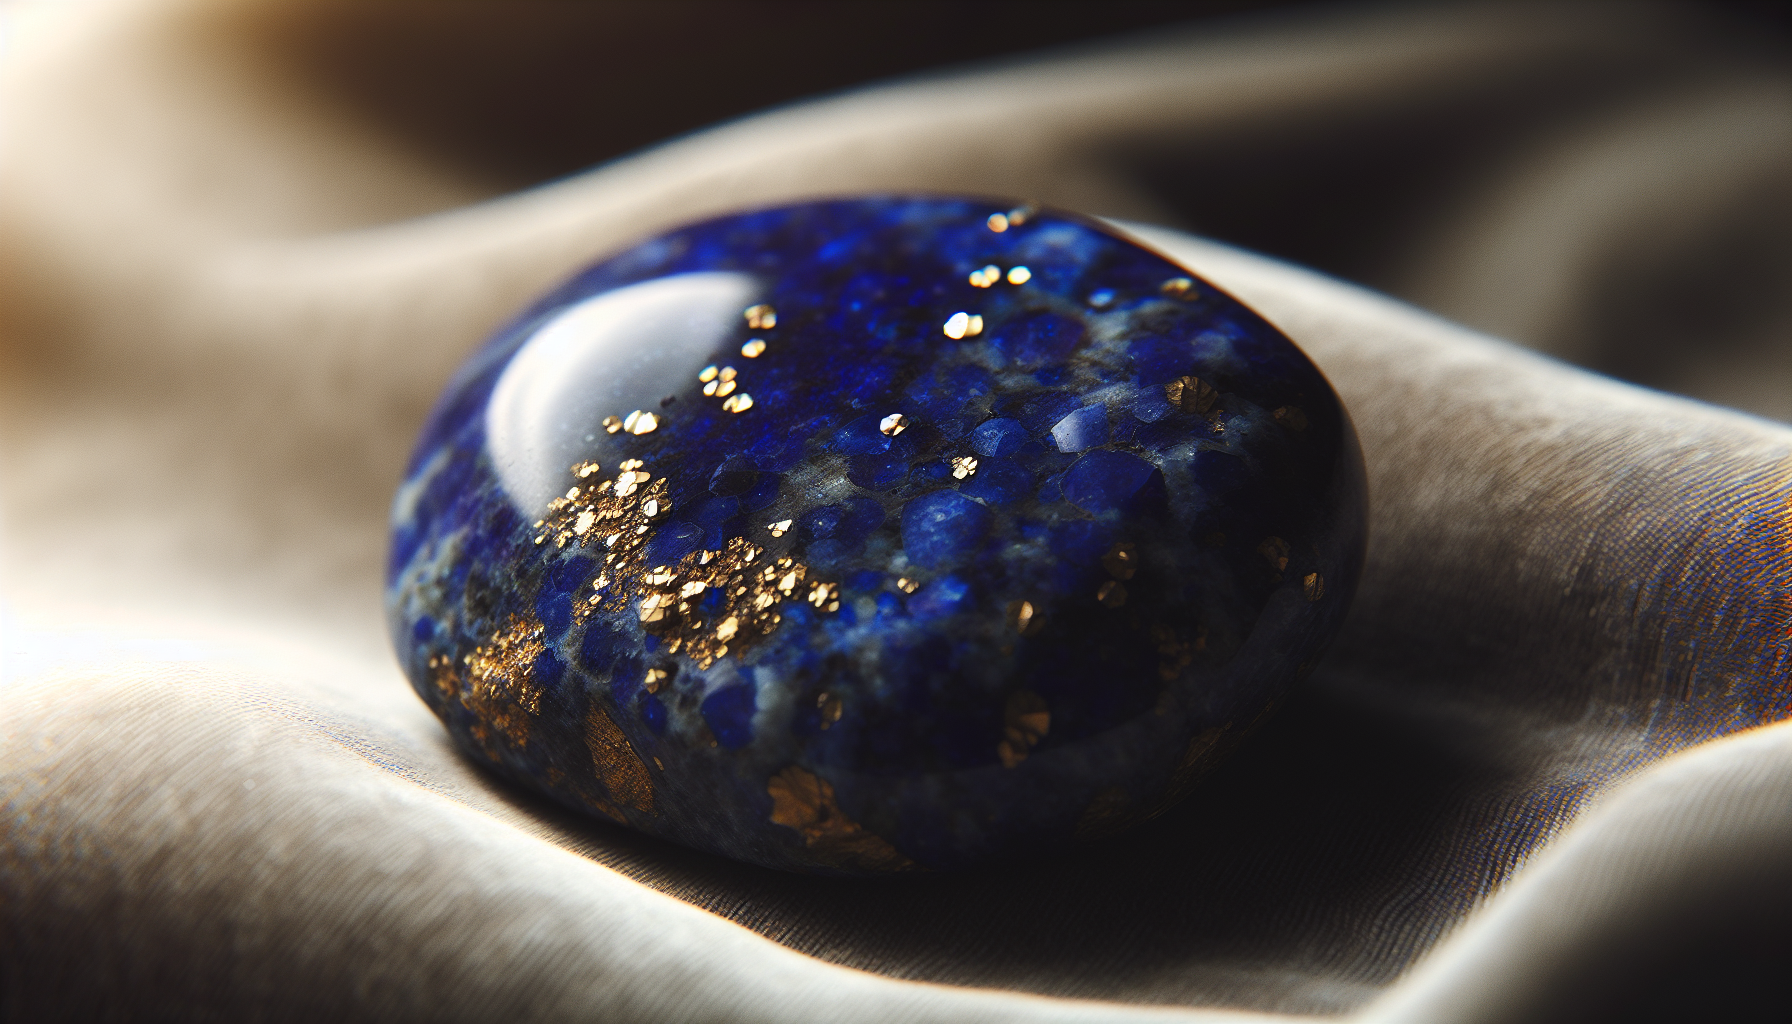 Lapis Lazuli gemstone